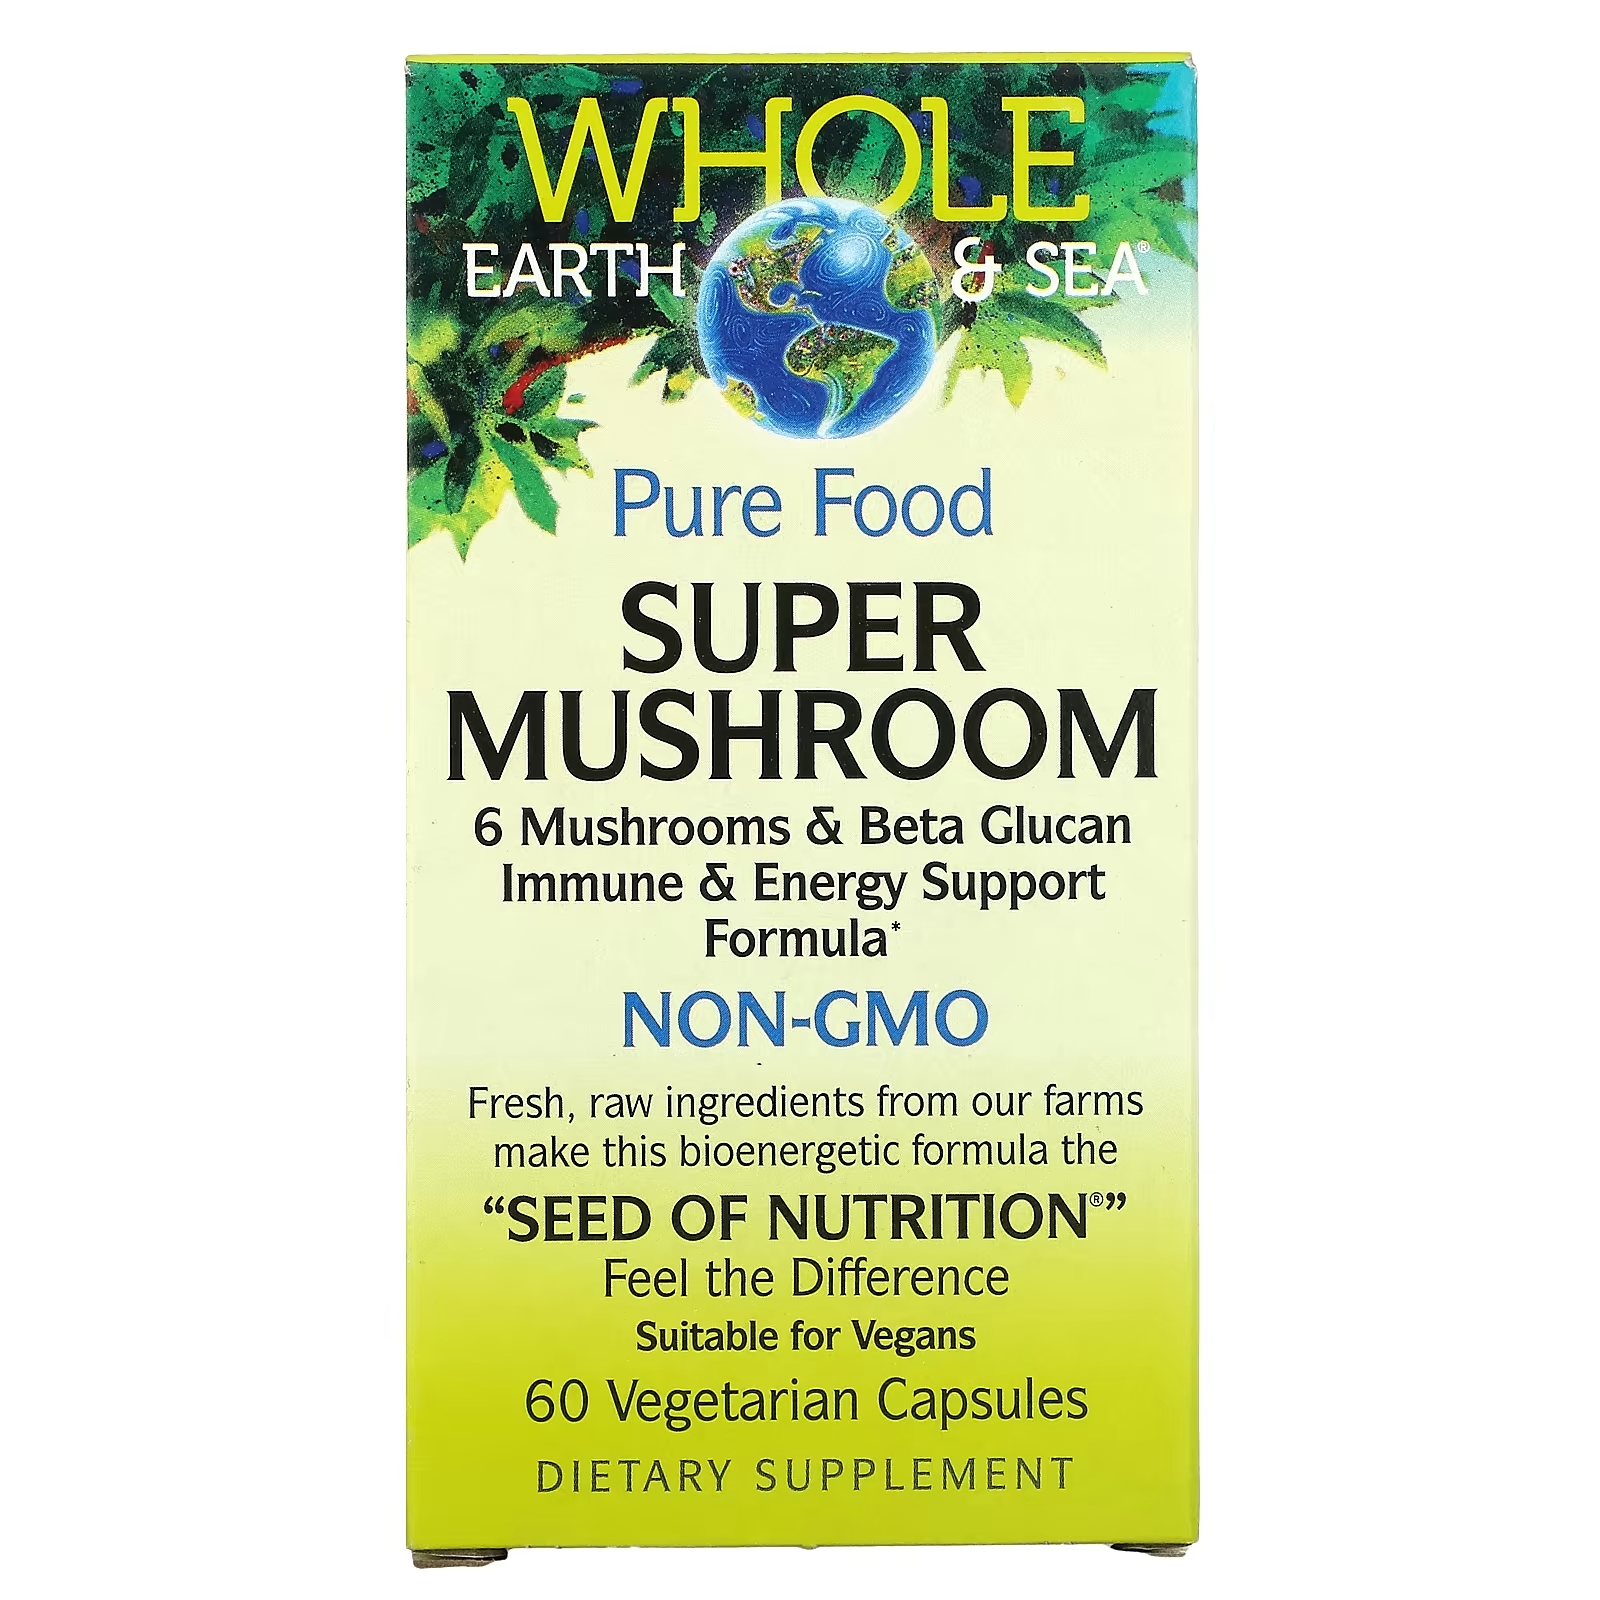 brand stewart whole earth discipline Natural Factors Whole Earth & Sea супер гриб, 60 вегетарианских капсул